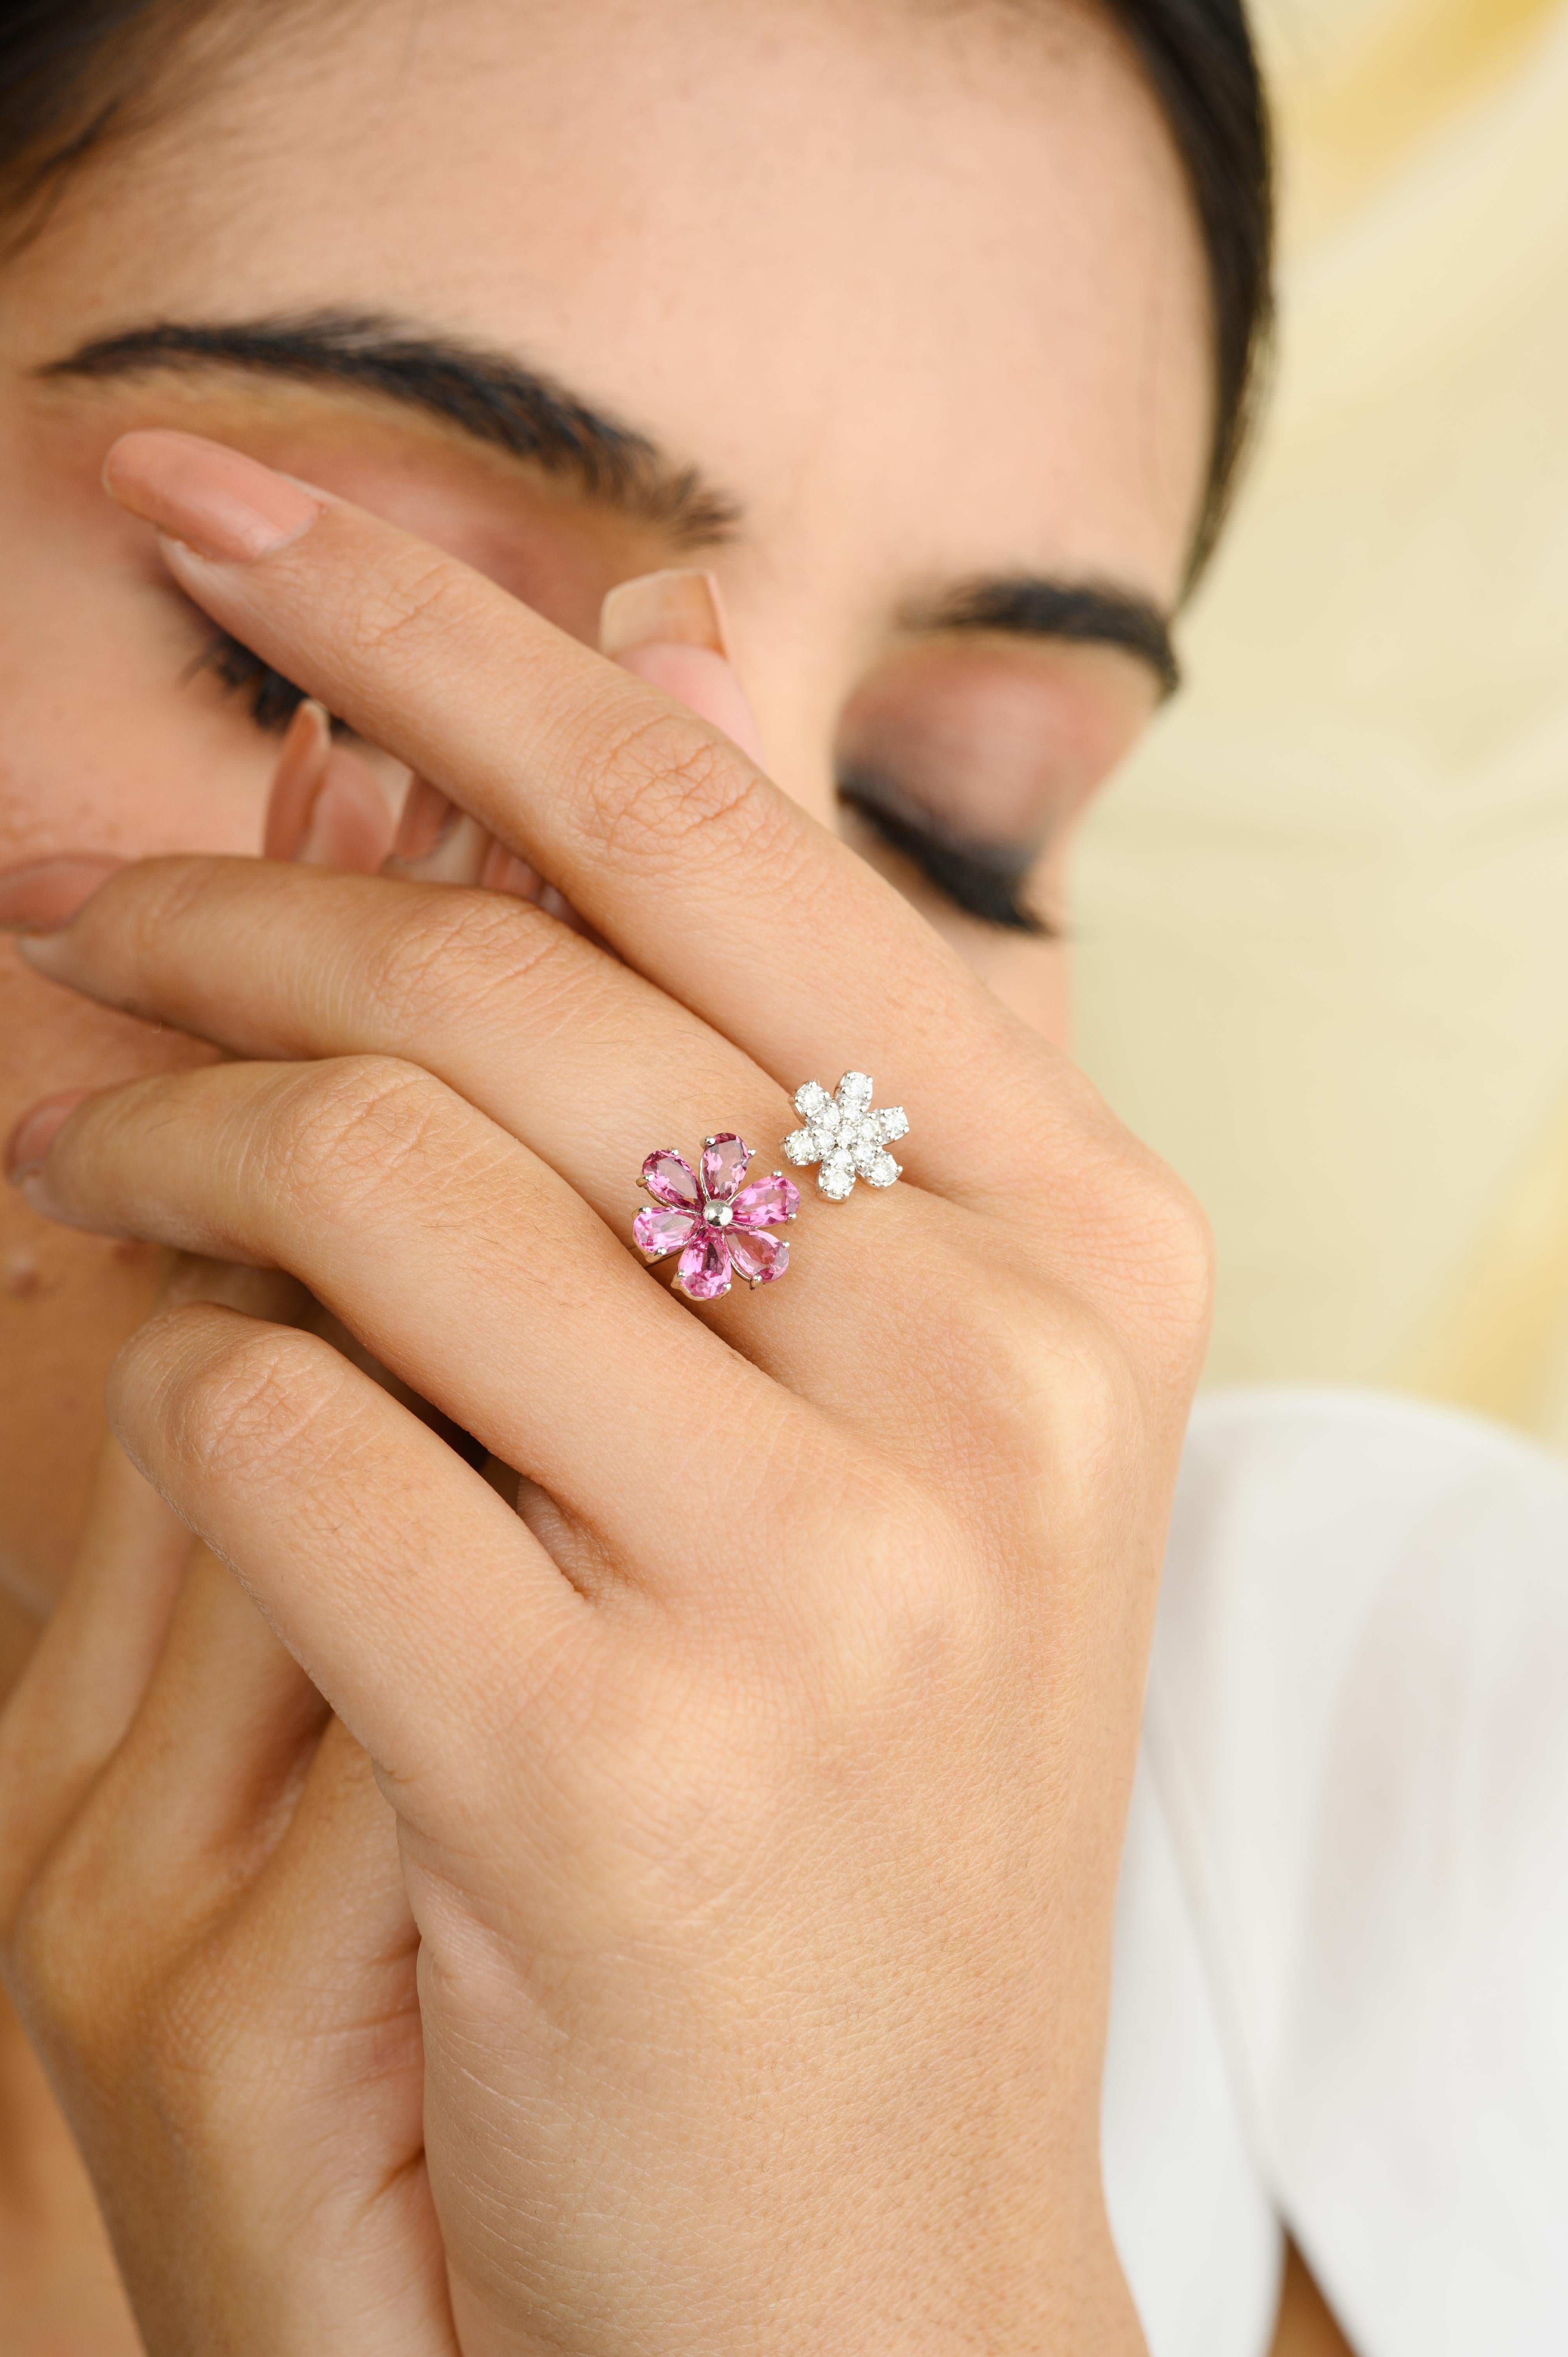 For Sale:  14 Karat Solid White Gold Tourmaline Diamond Floral Open Wedding Ring Gift 5